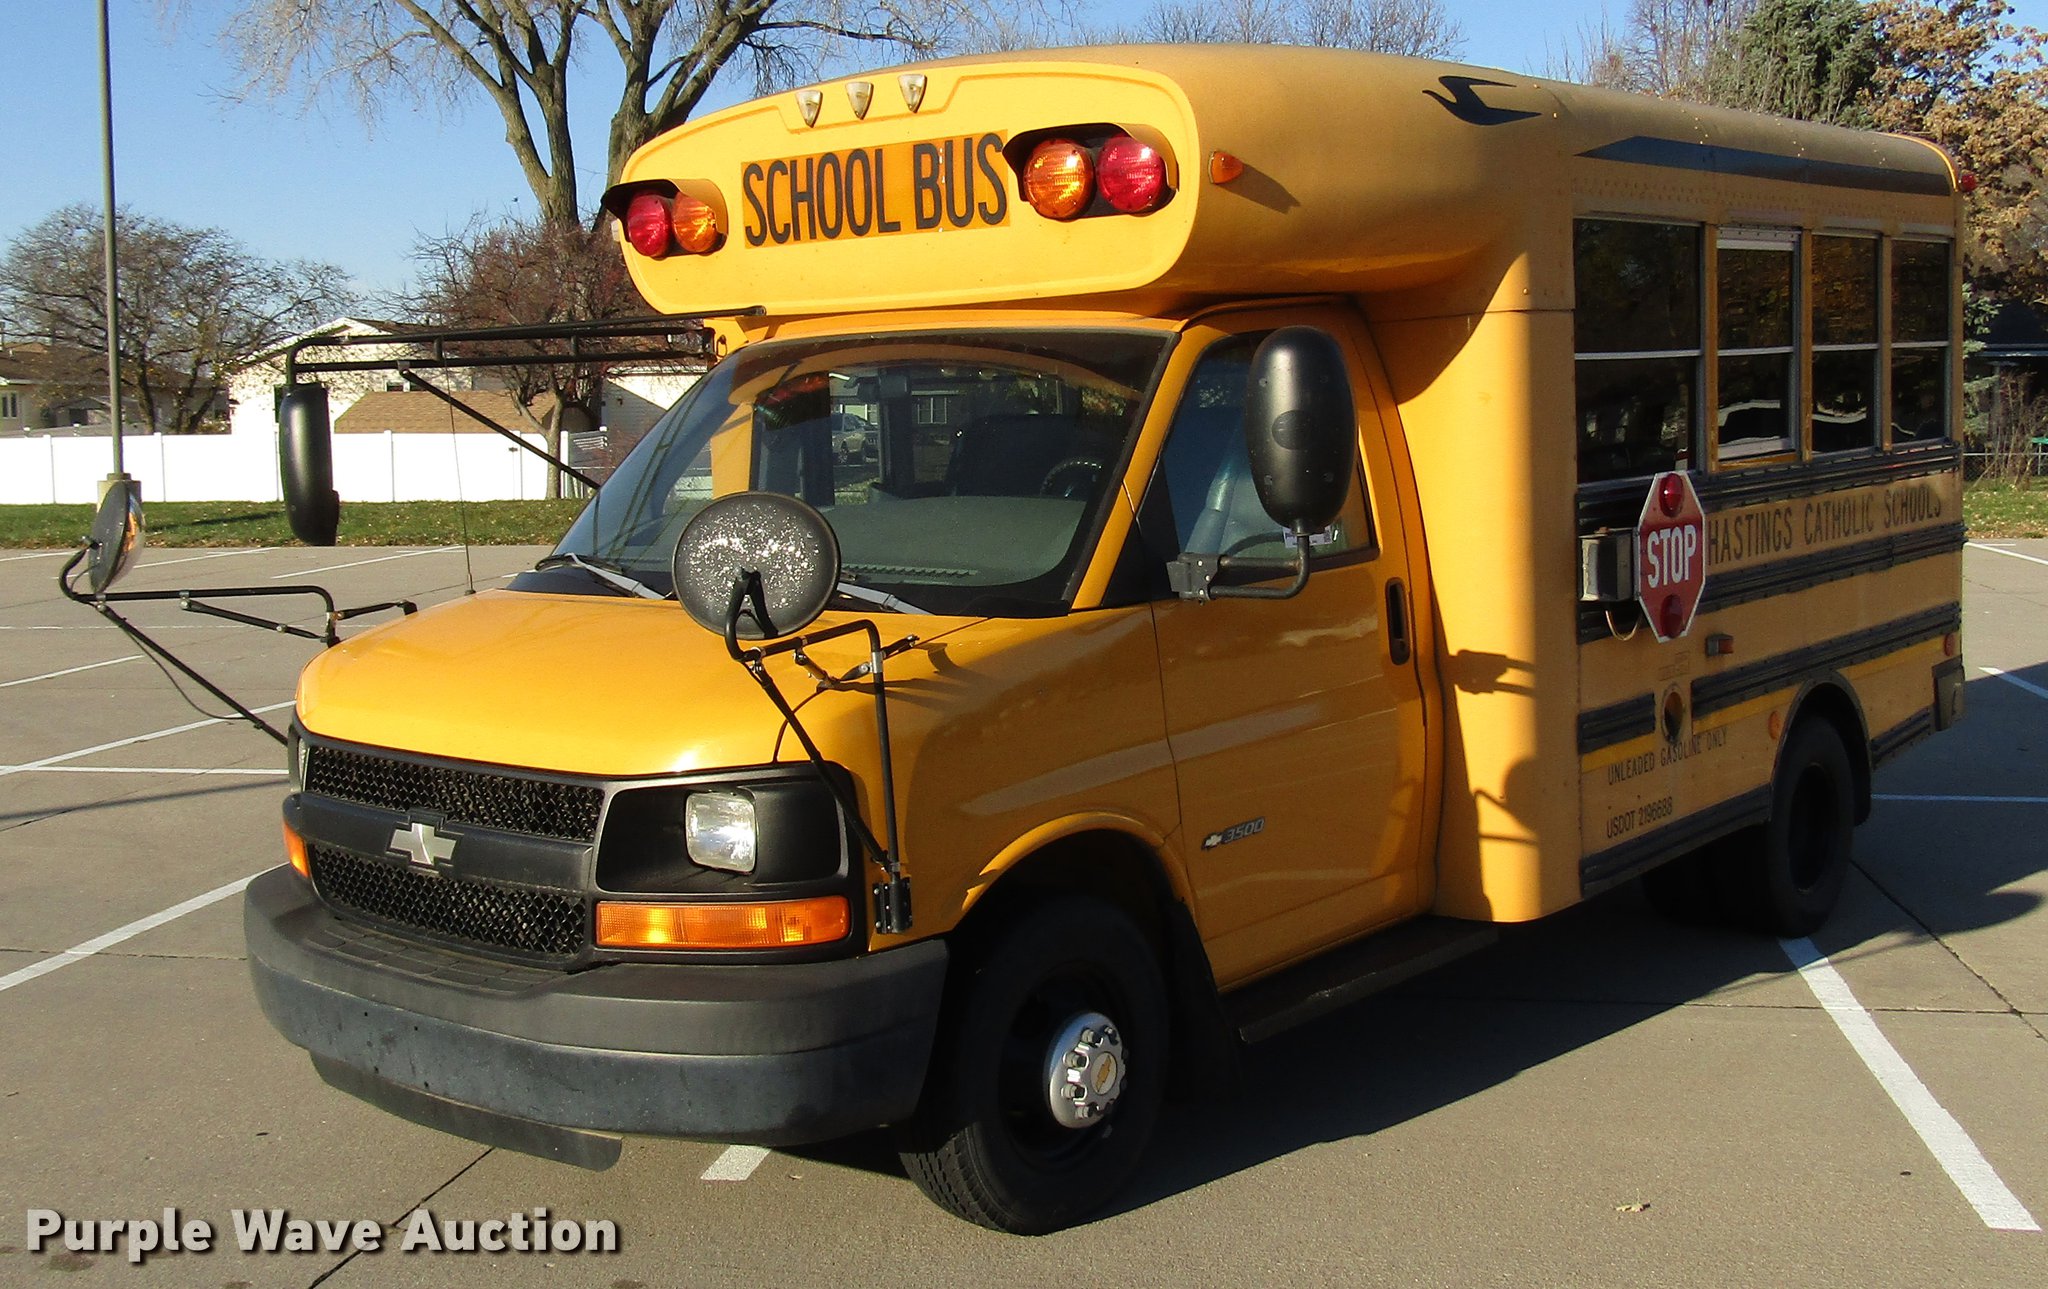 2003 Chevrolet Express 3500 school bus in Hastings, NE | Item DD3799 sold |  Purple Wave